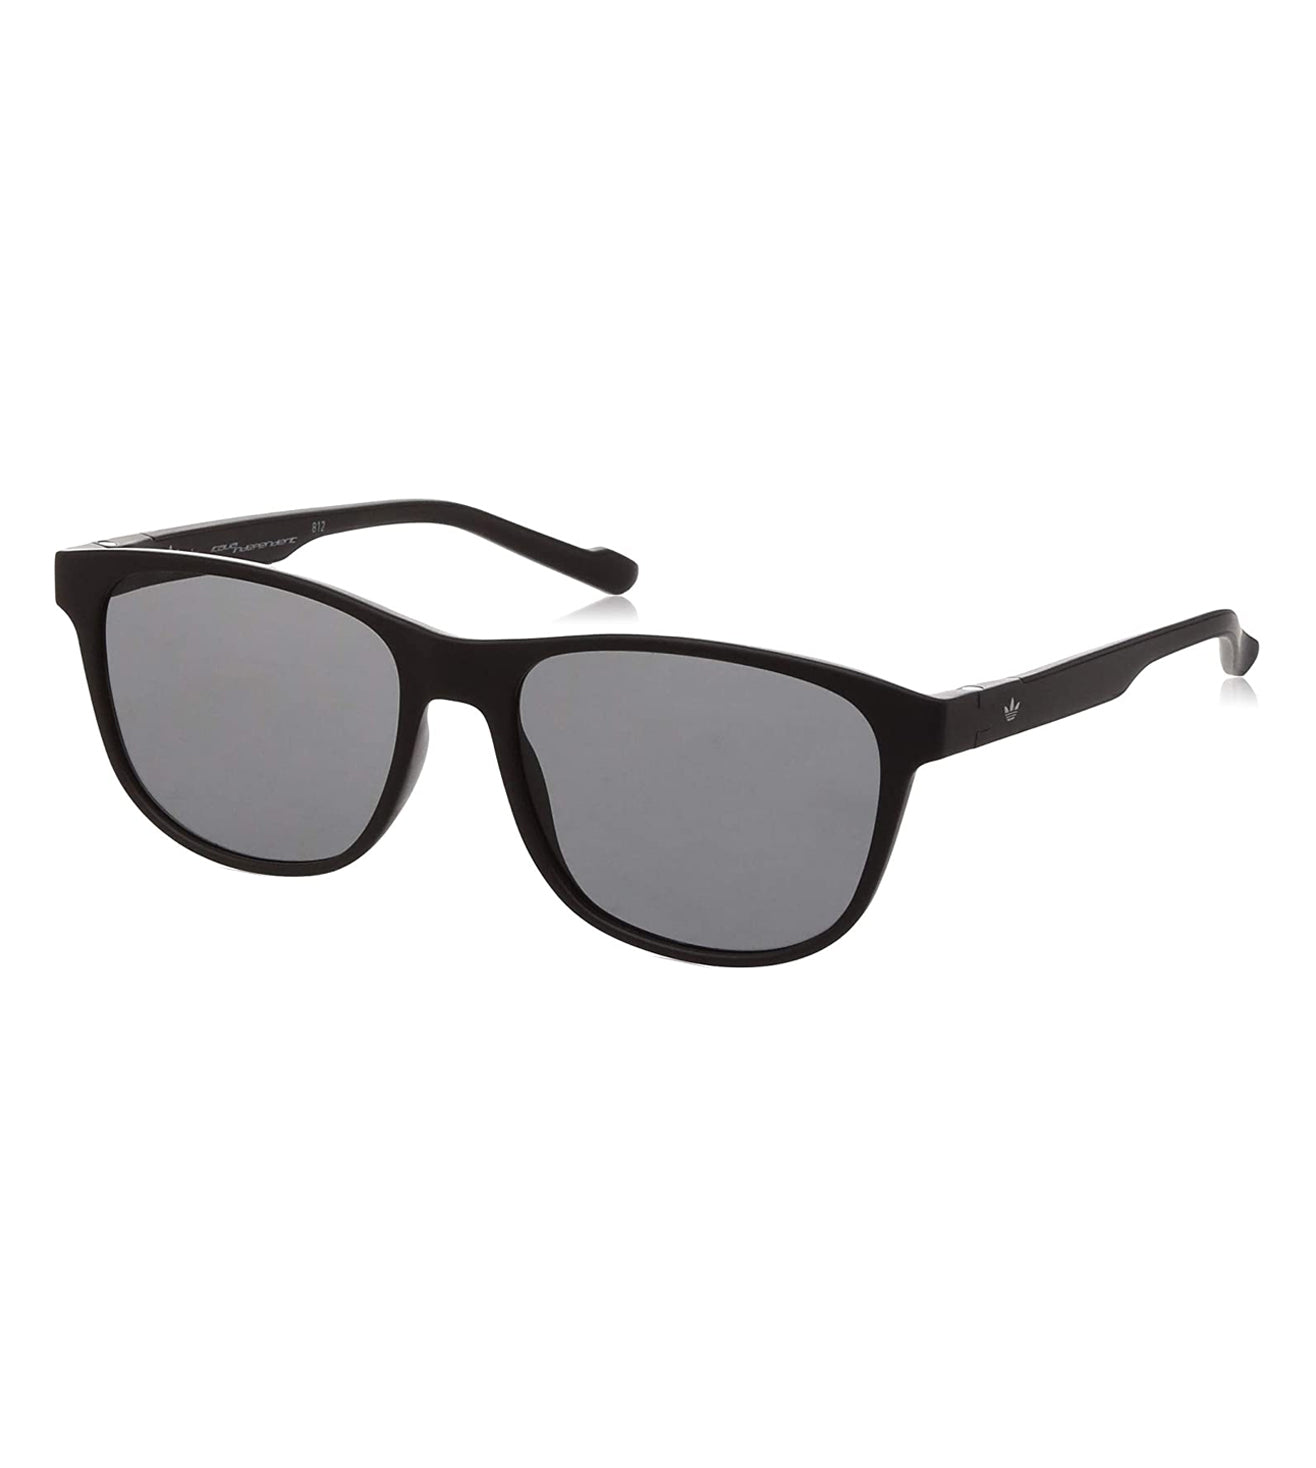 Grey Wayfarer Men's Sunglasses